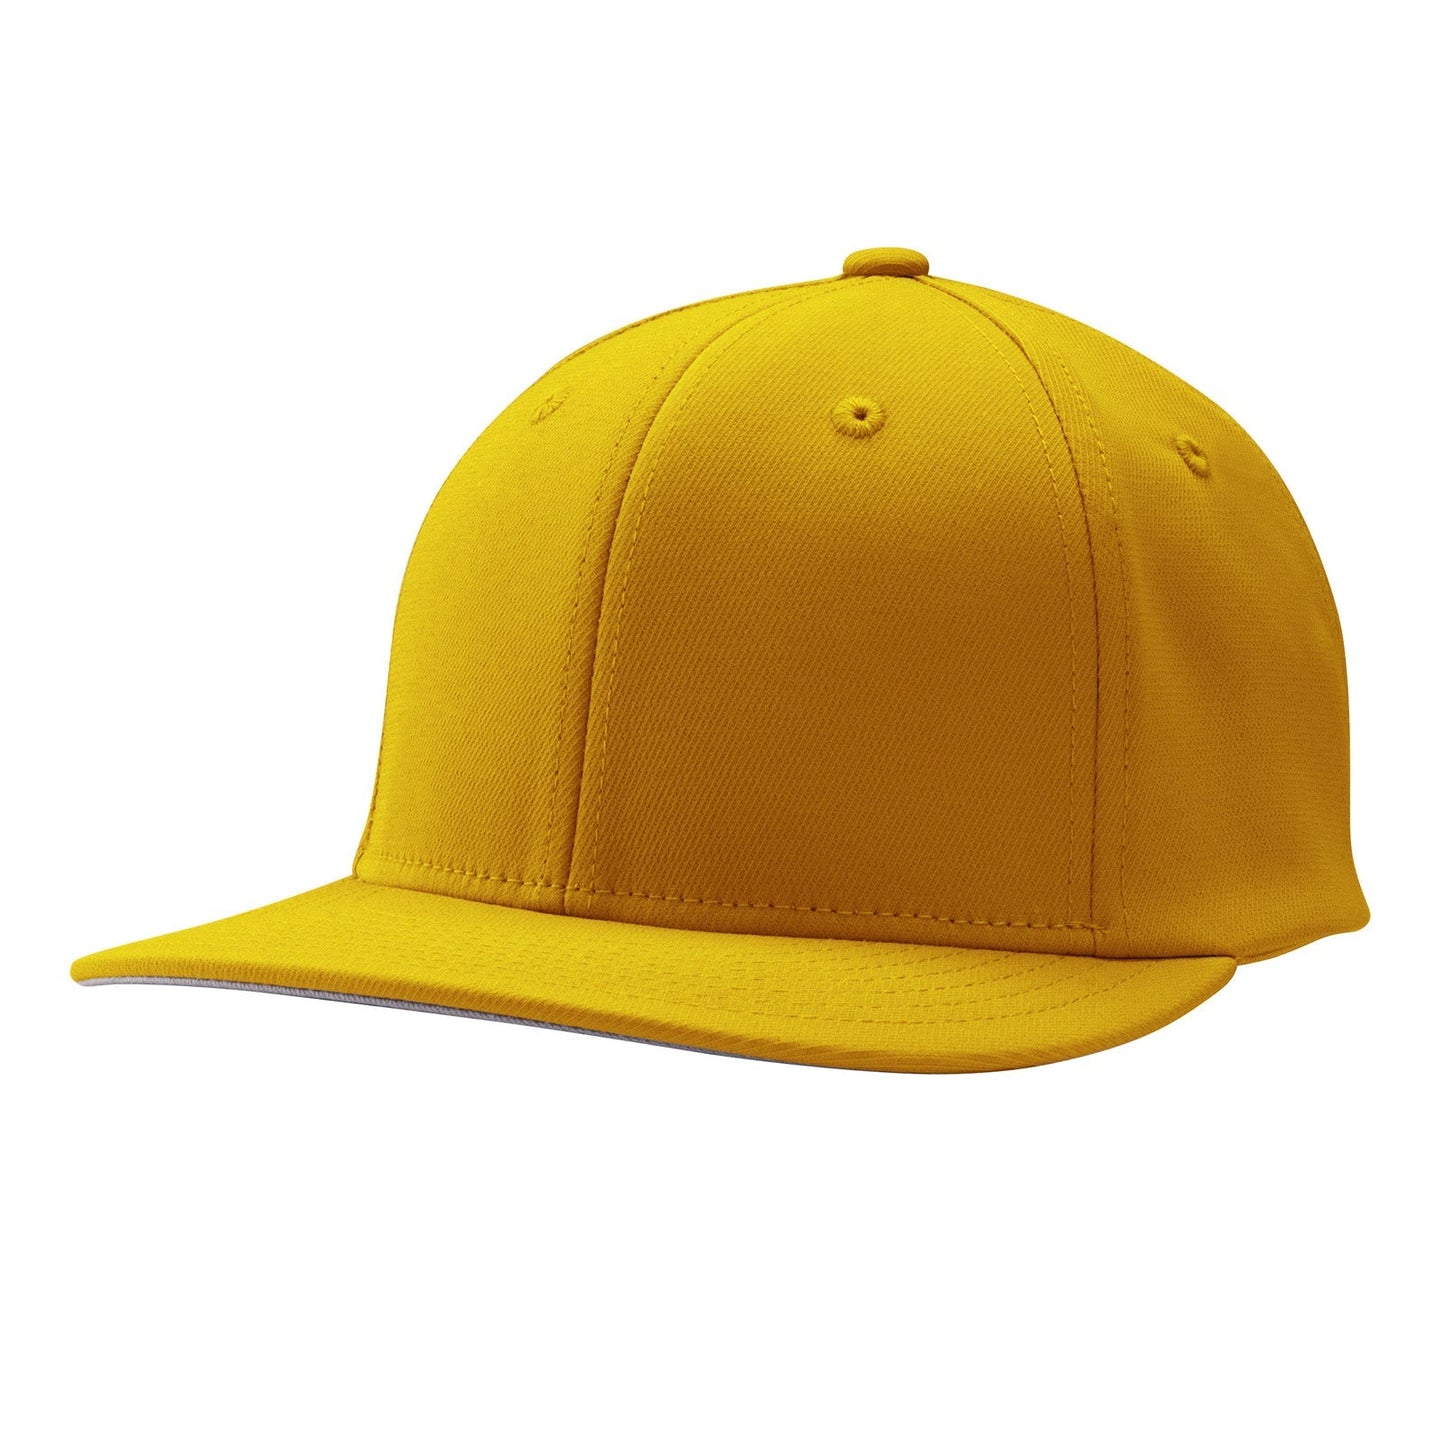 MVP FITTED BASEBALL CAP - Select